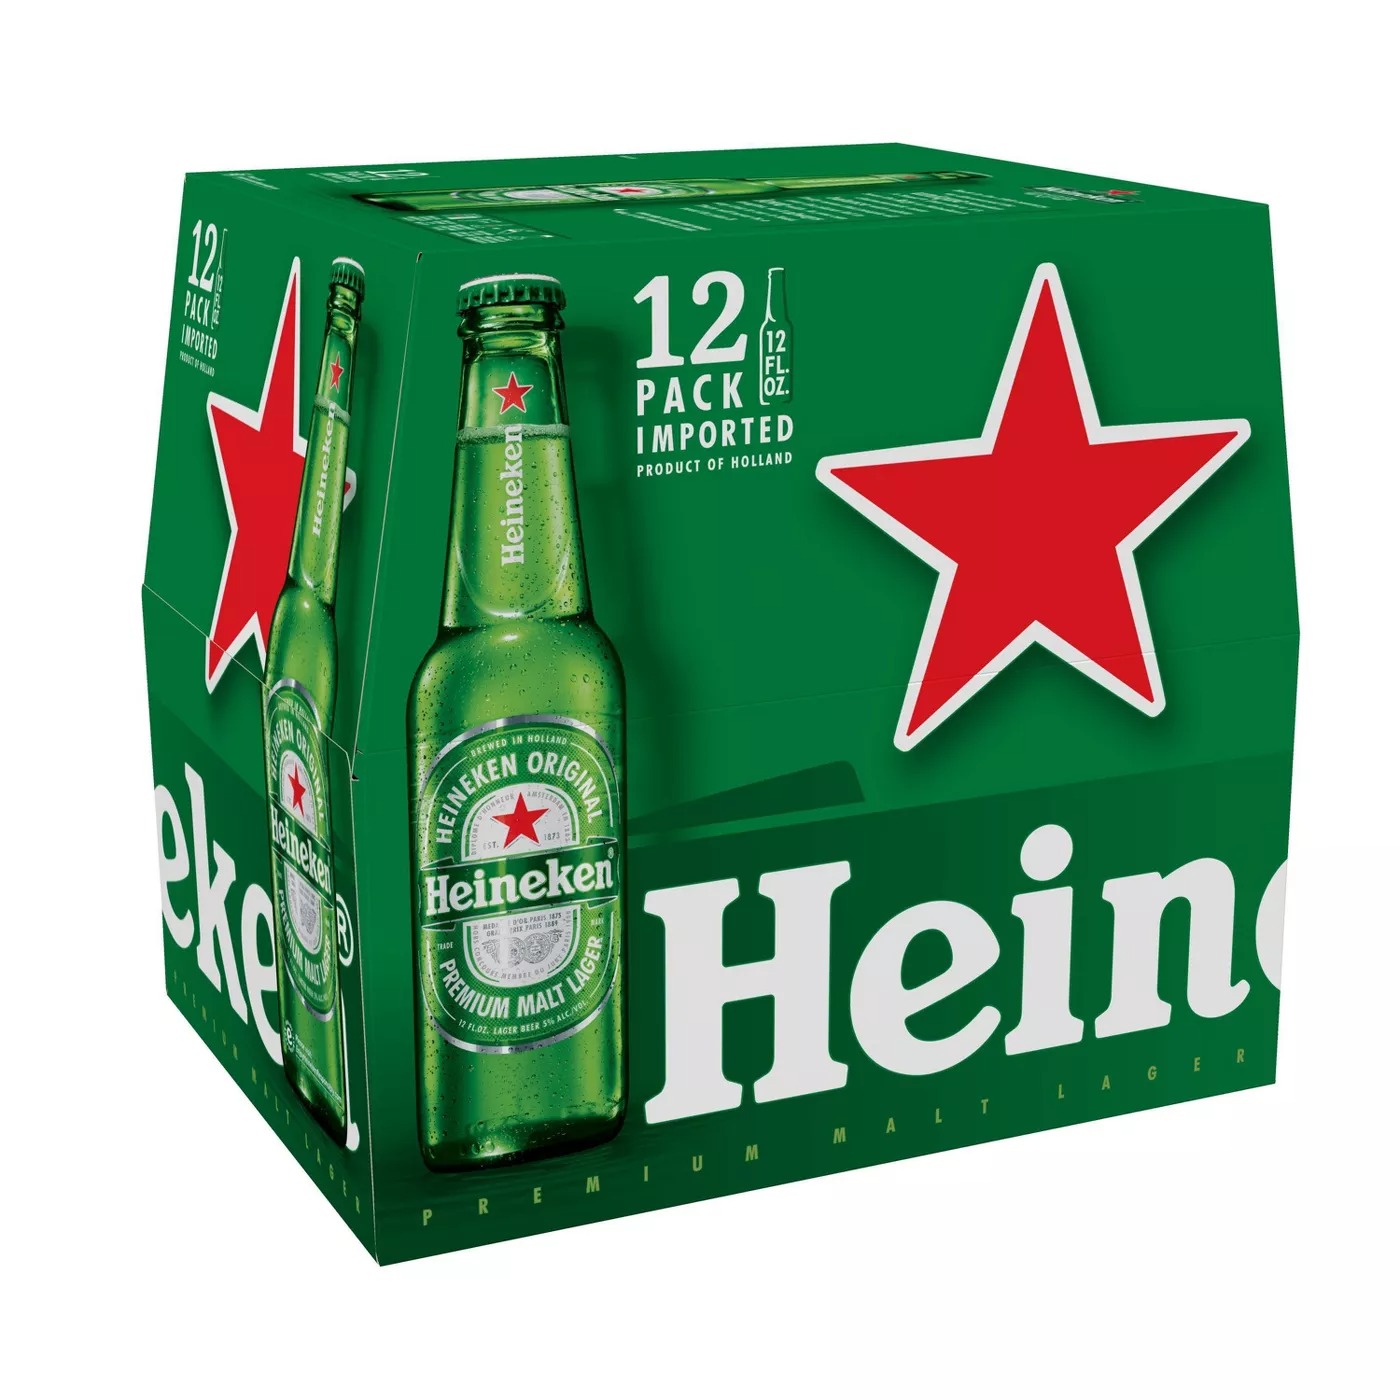 Heineken Beer 12 Pack for $7 After Two Rebates at Target B&M - YMMV Based on State